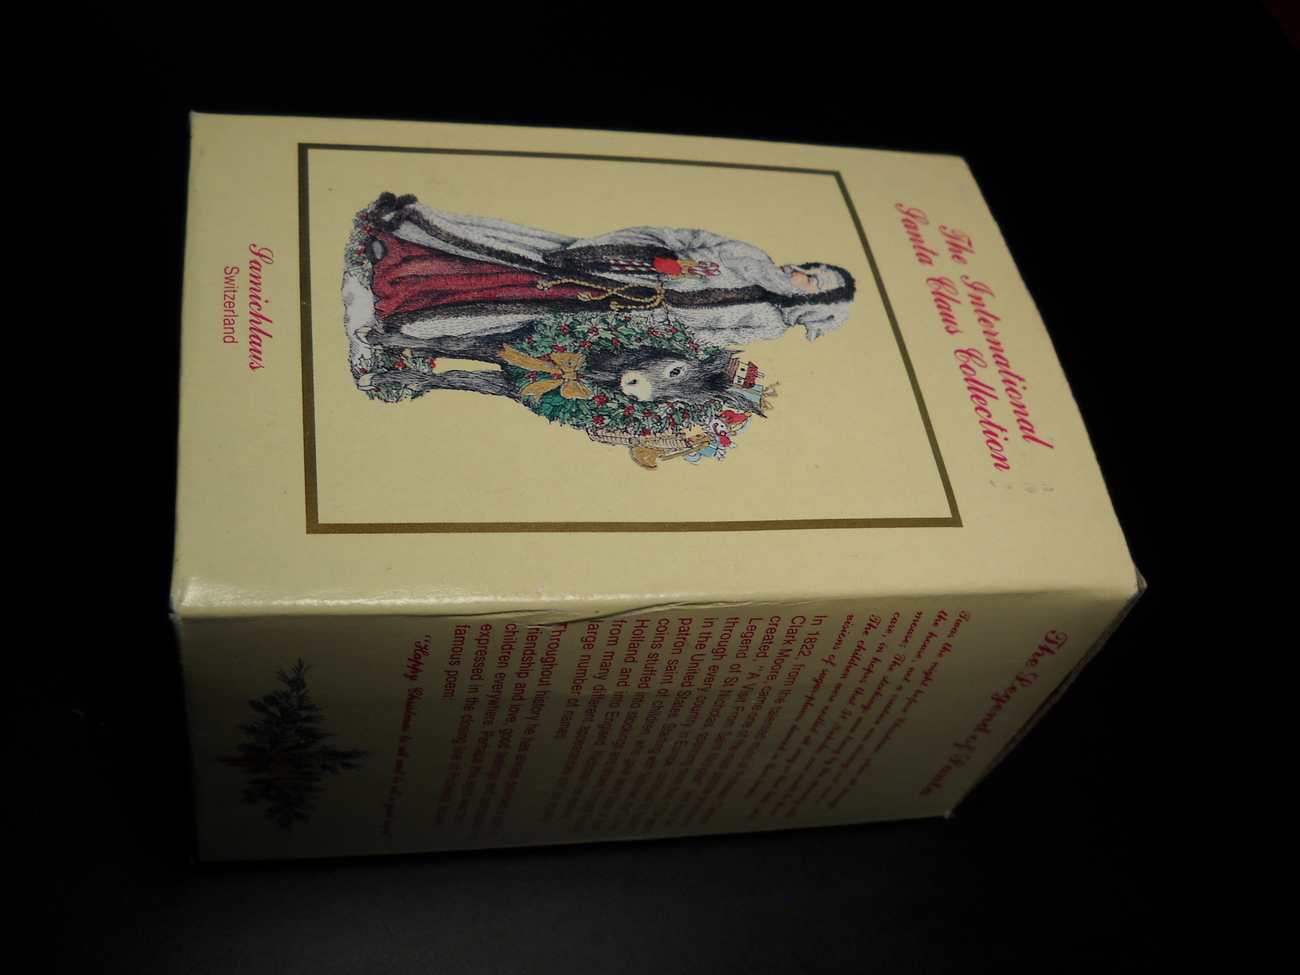 International Santa Collection Samichlaus Switzerland 1993 Grey Donkey Boxed - $8.99